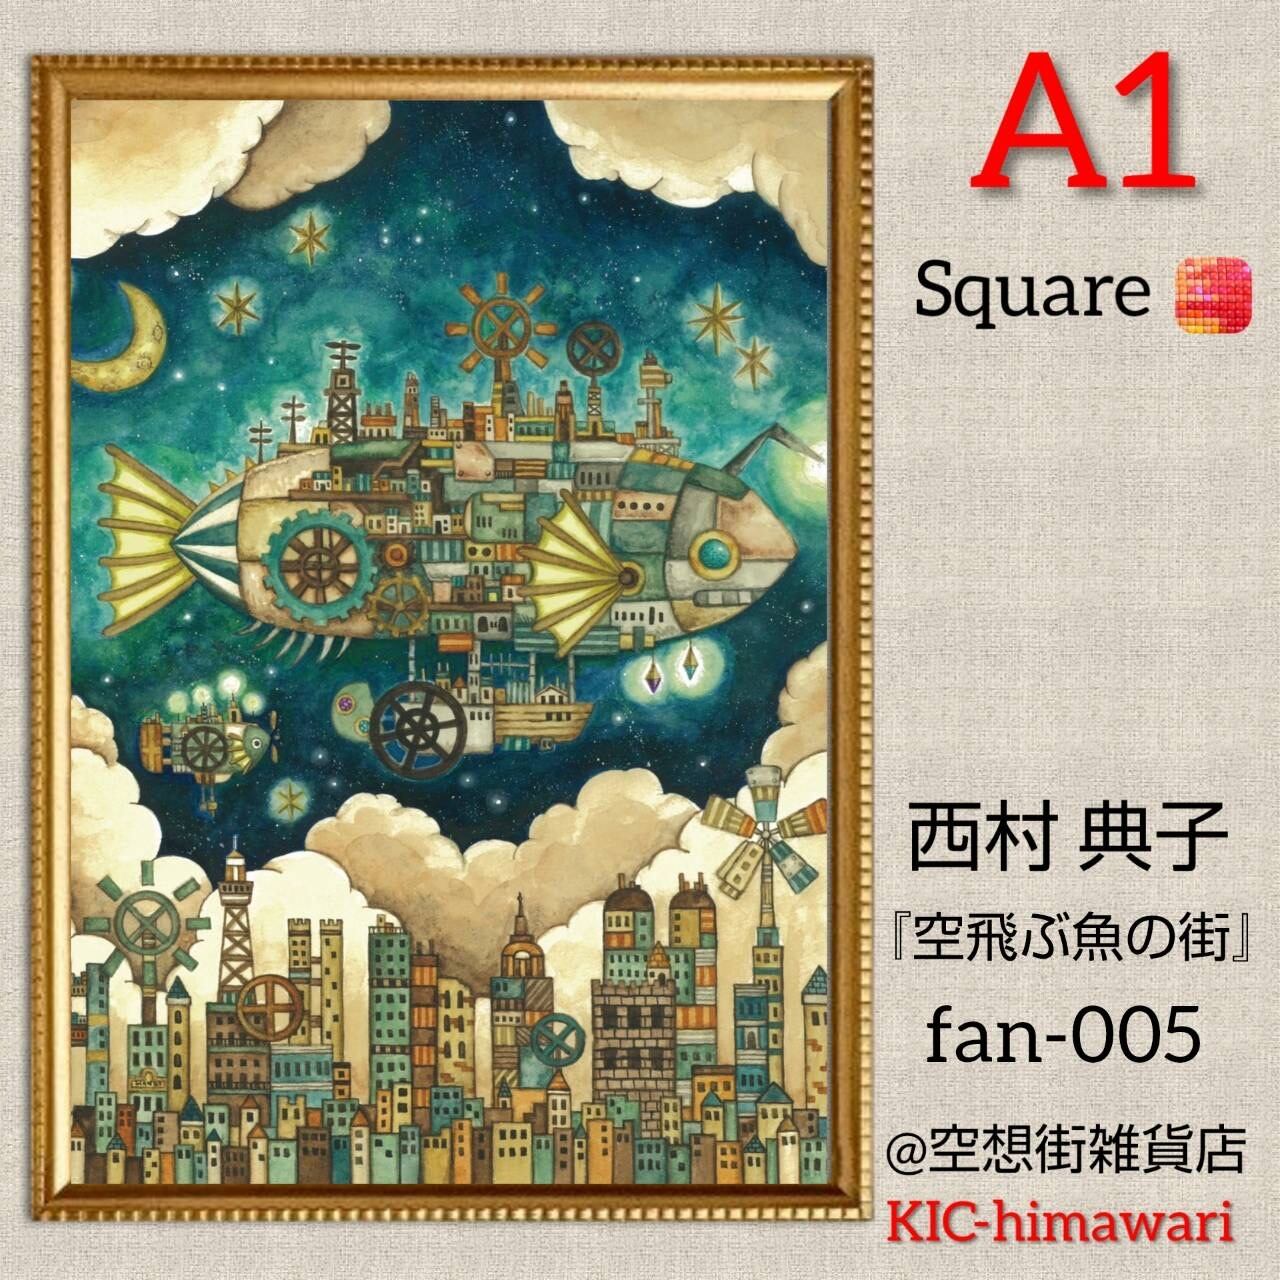 A1サイズ 四角ビーズ【fan-005】フルダイヤモンドアート